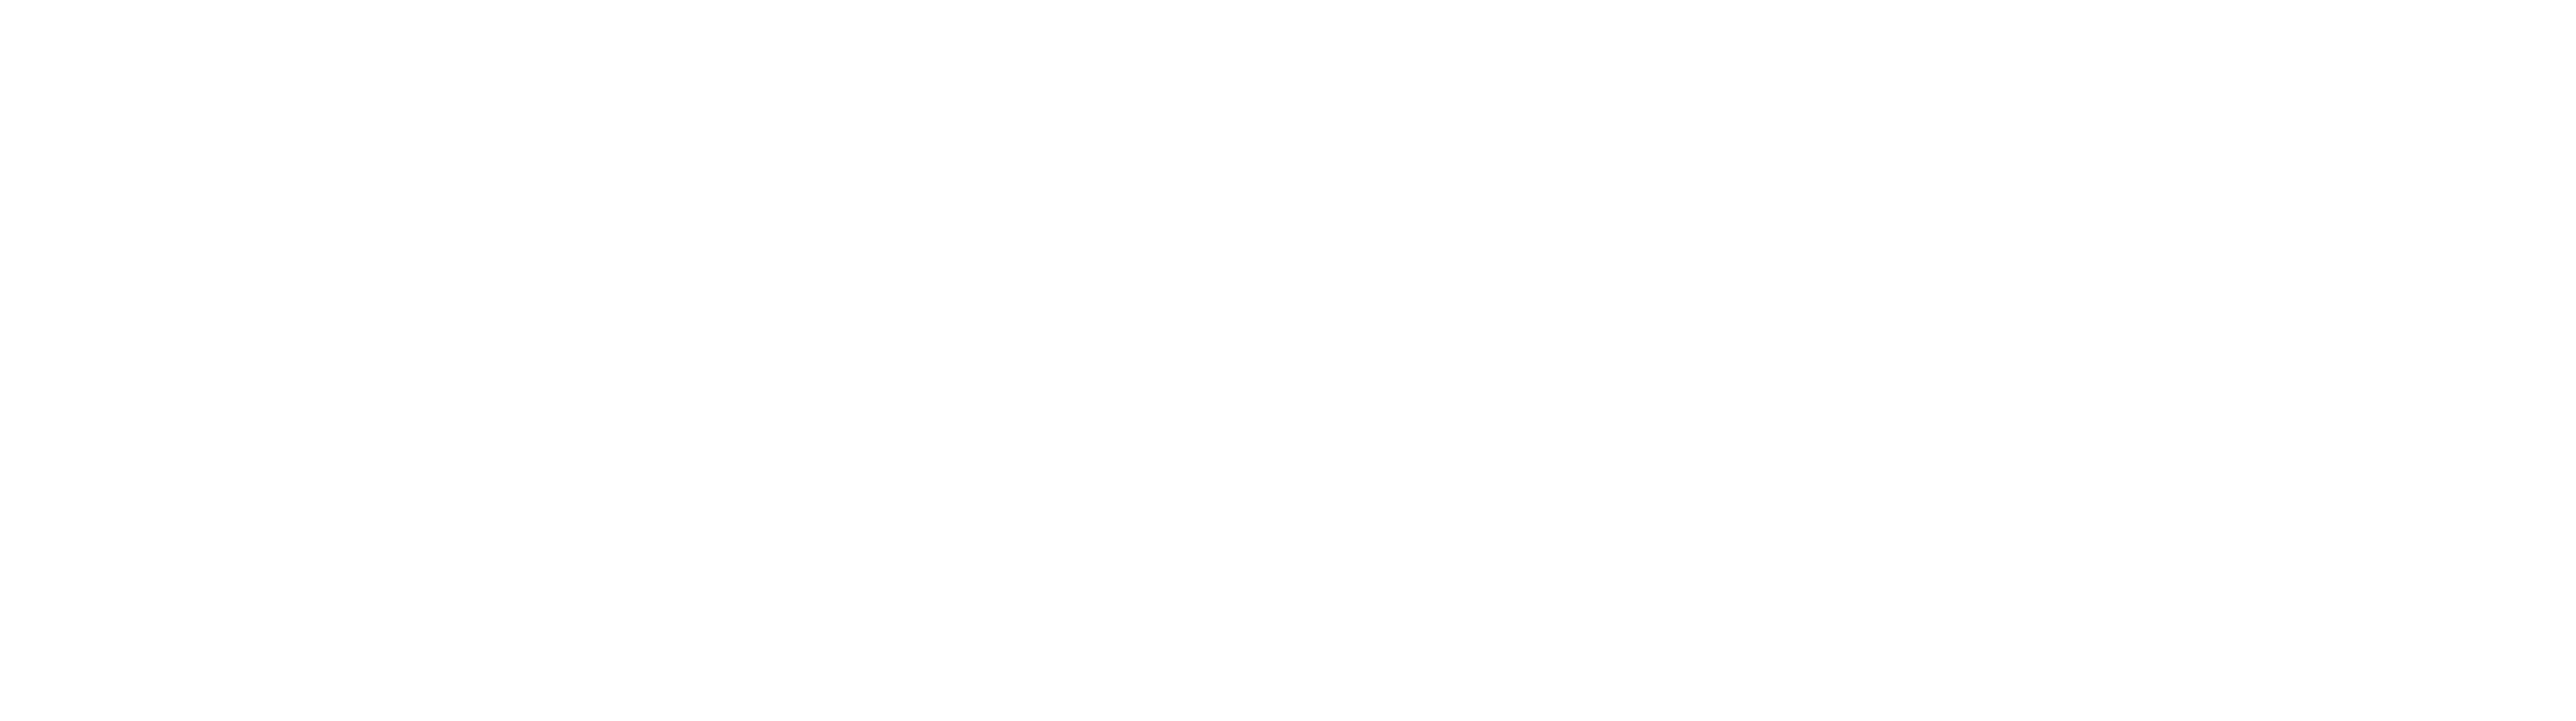 Mirrors Edge Logo Transparent Free PNG